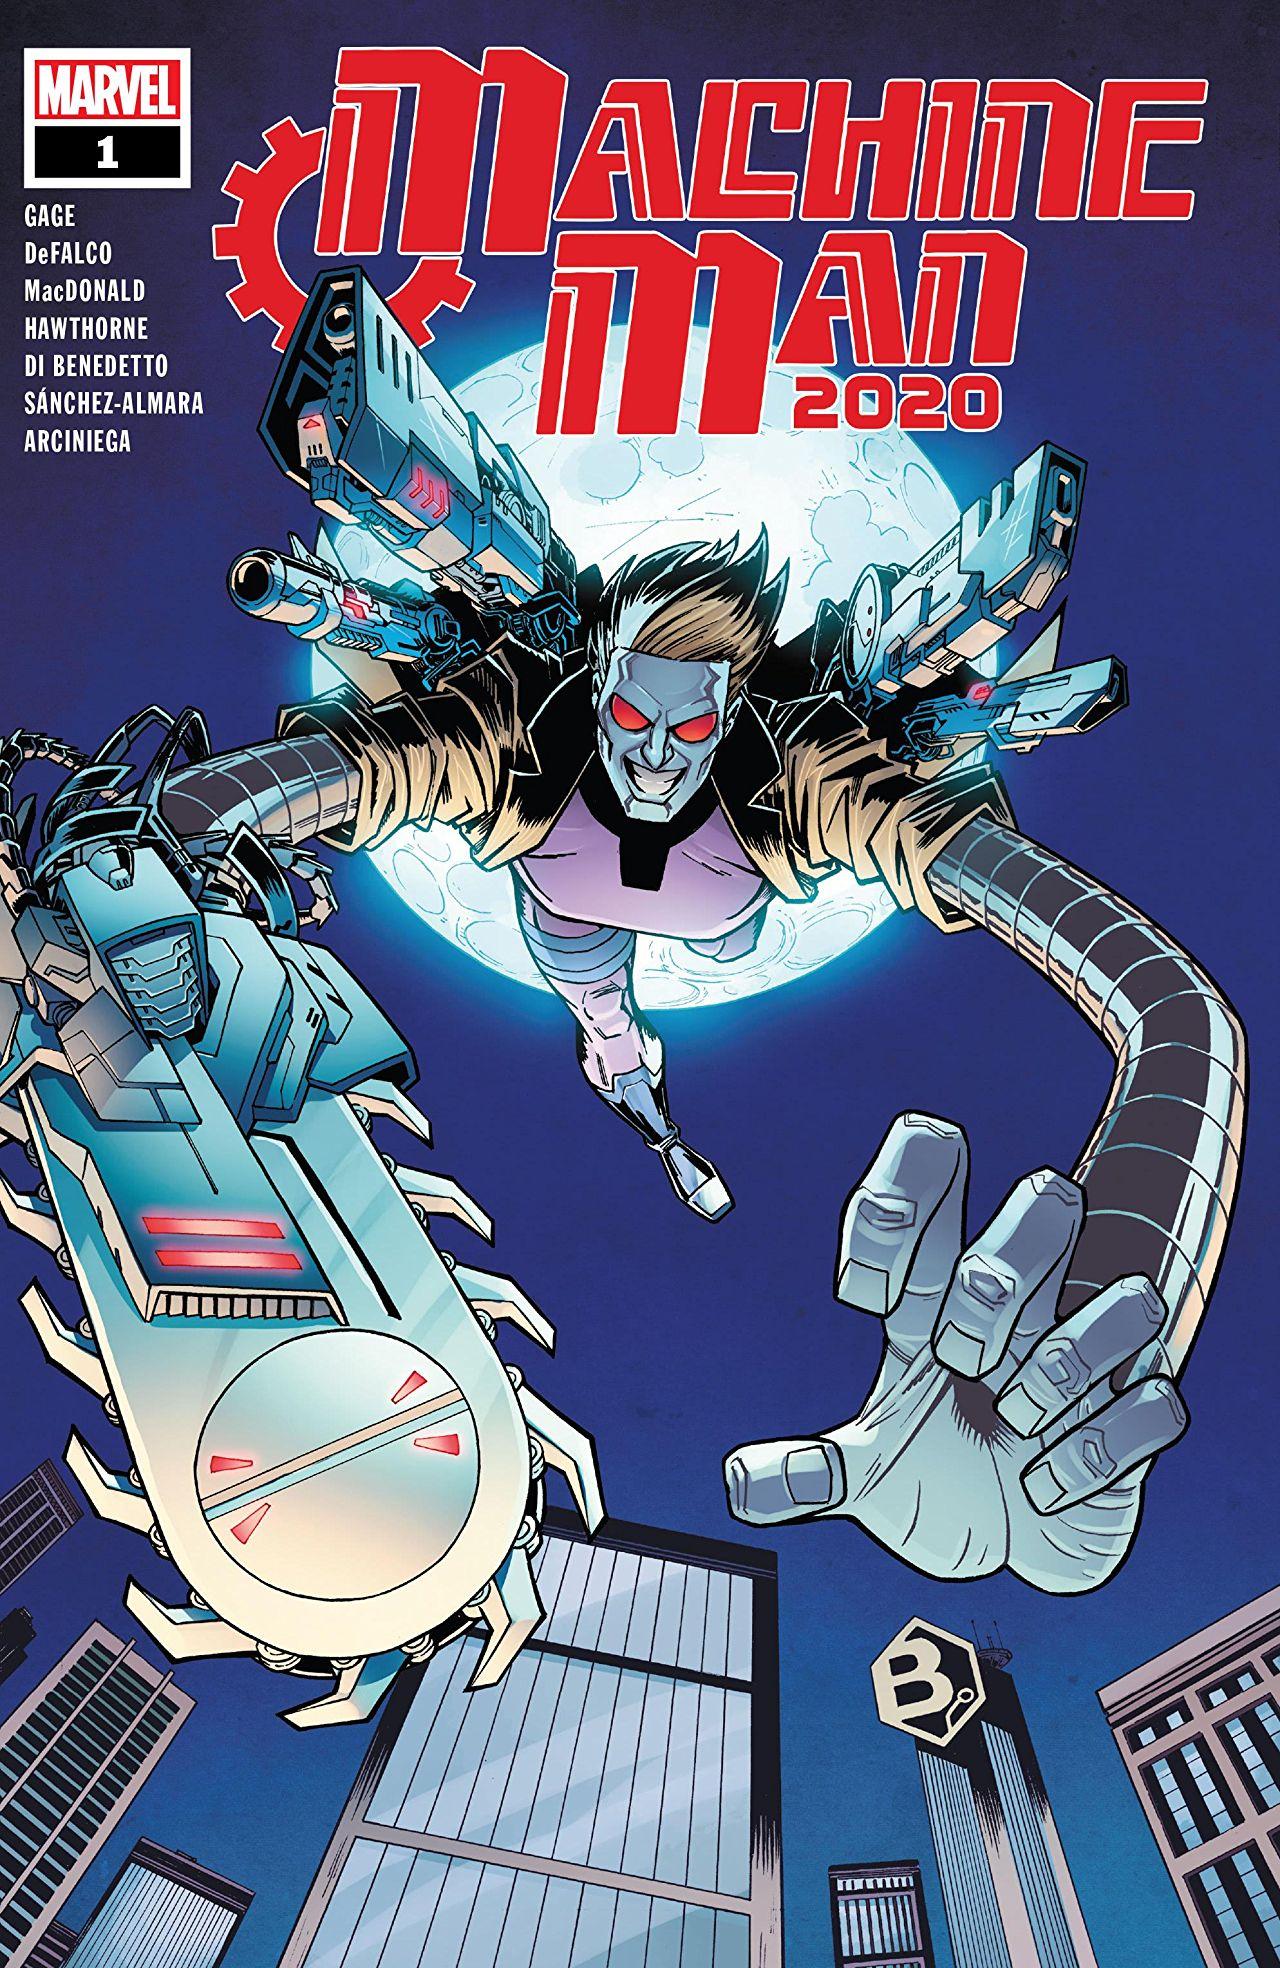 2020 Machine Man Vol. 1 #1